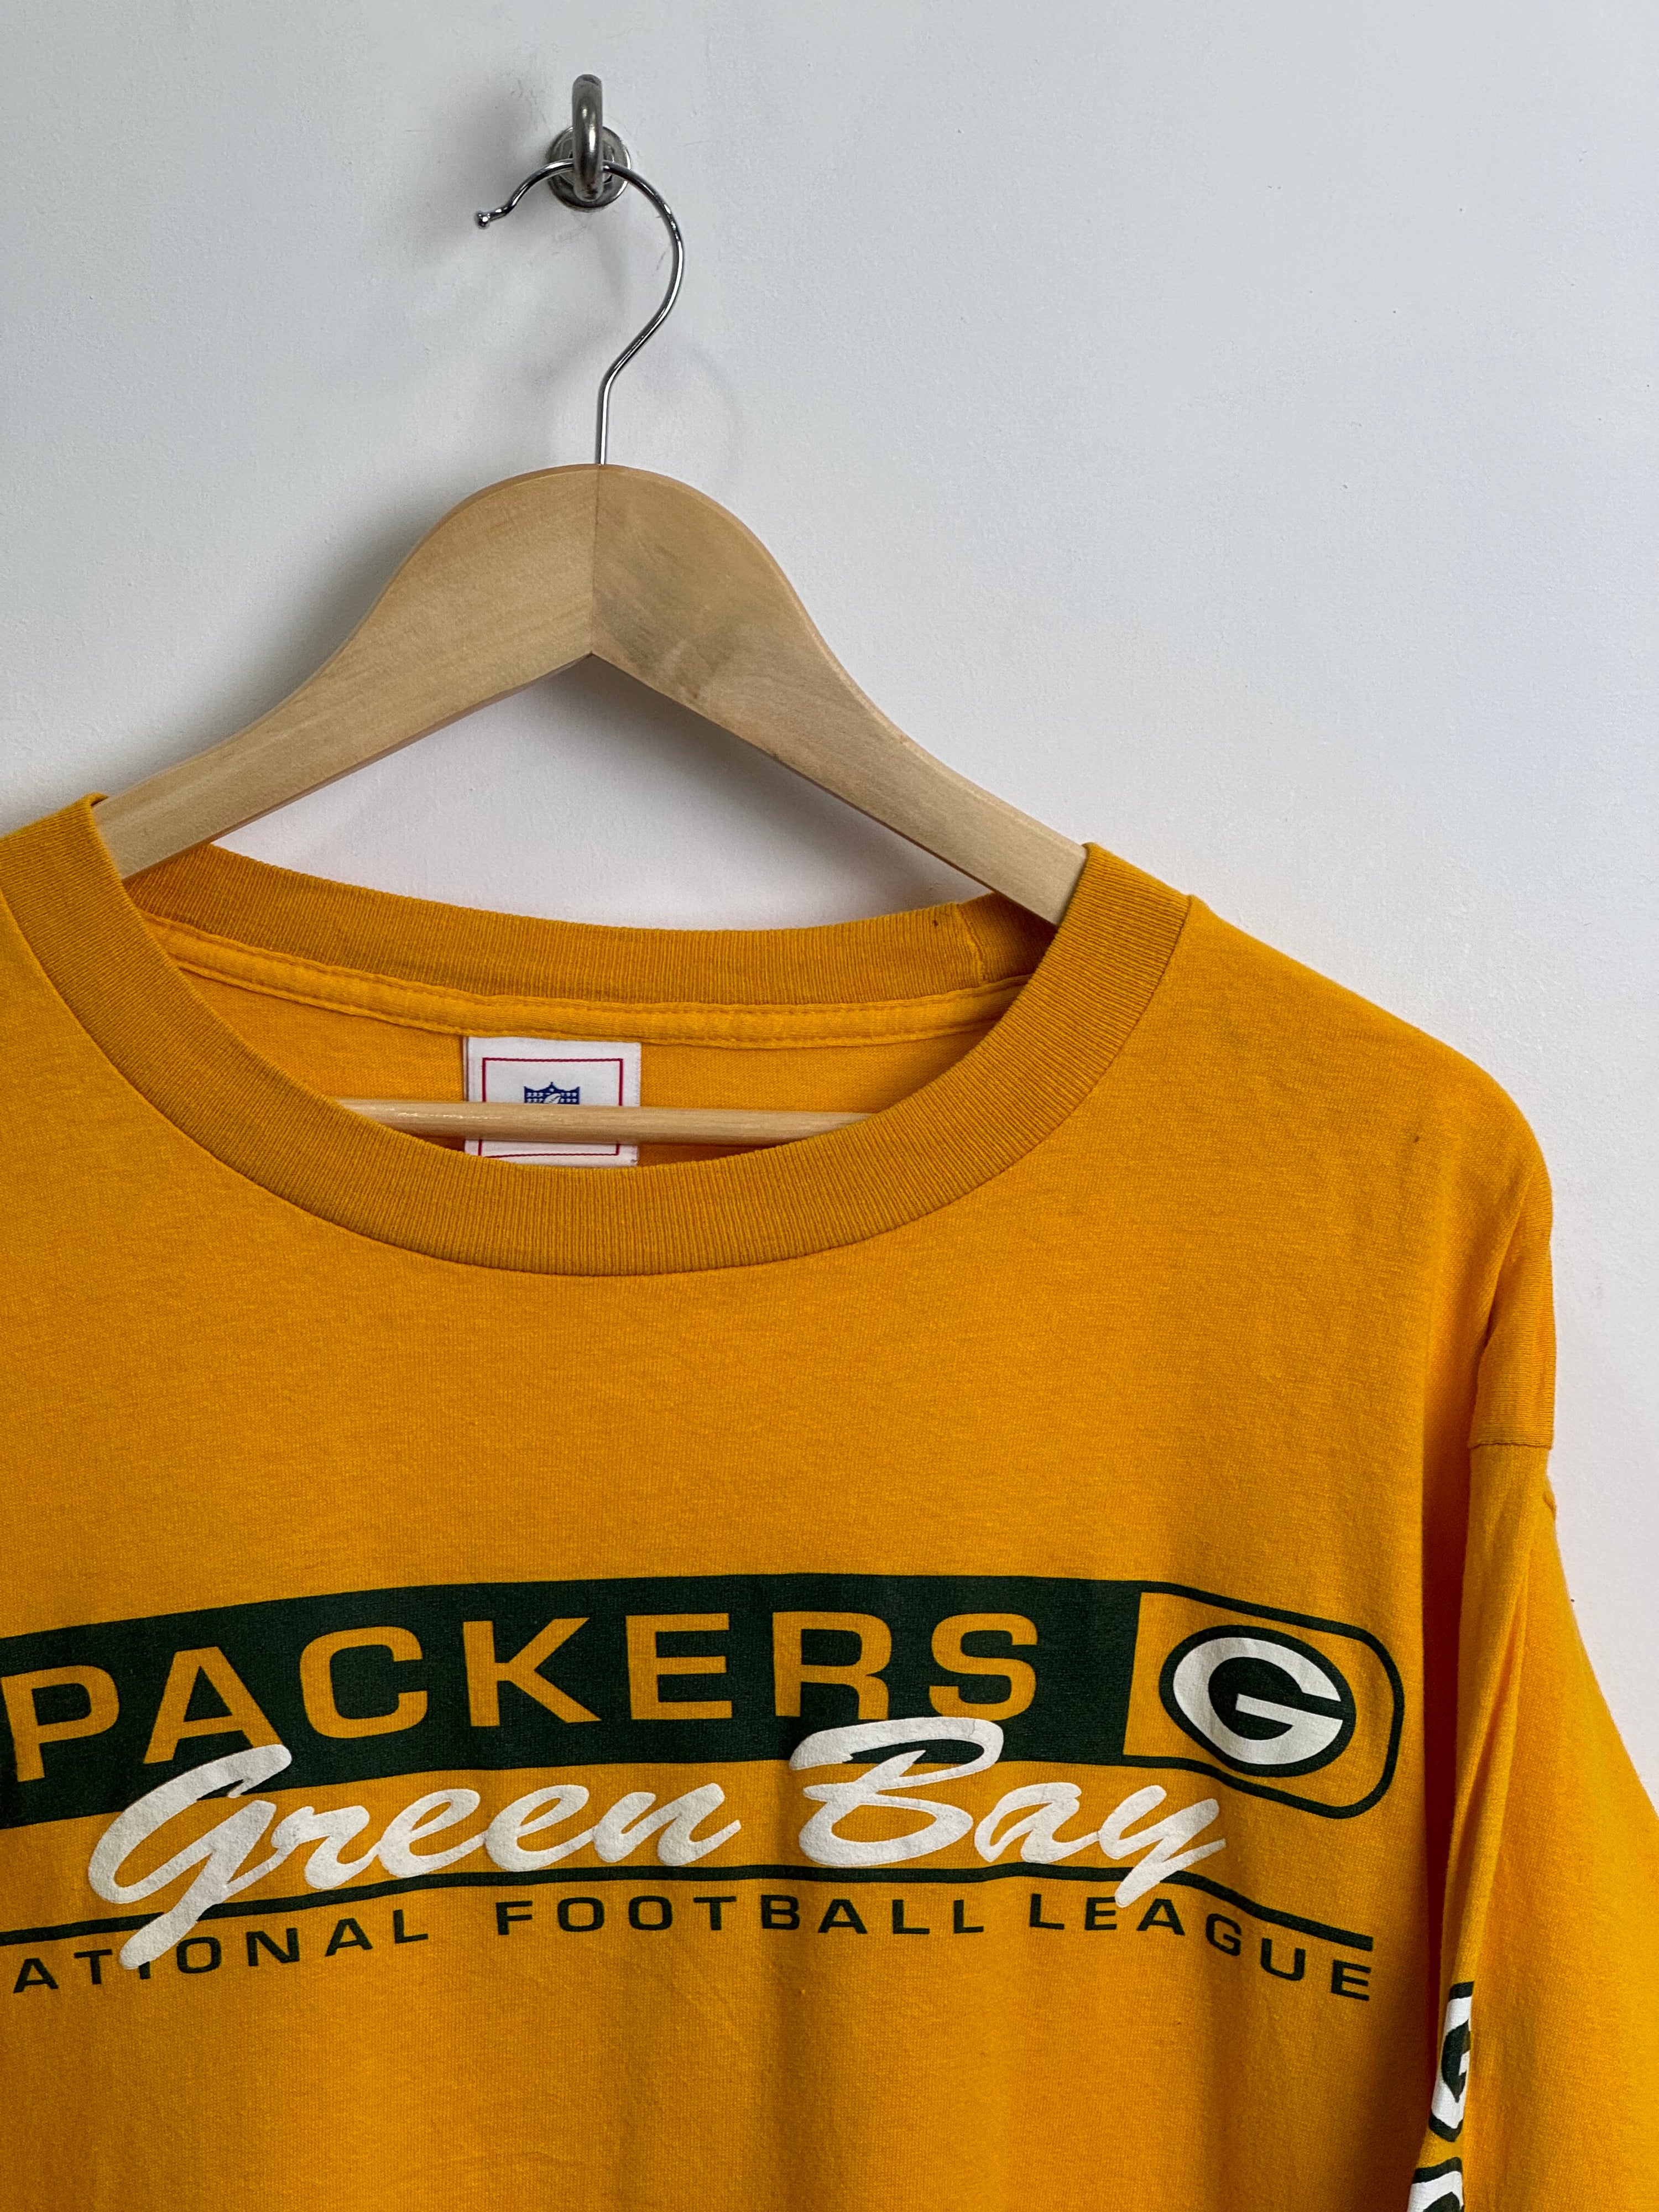 NFL Packers Green Bay Long-Sleeved Tee in Mustard